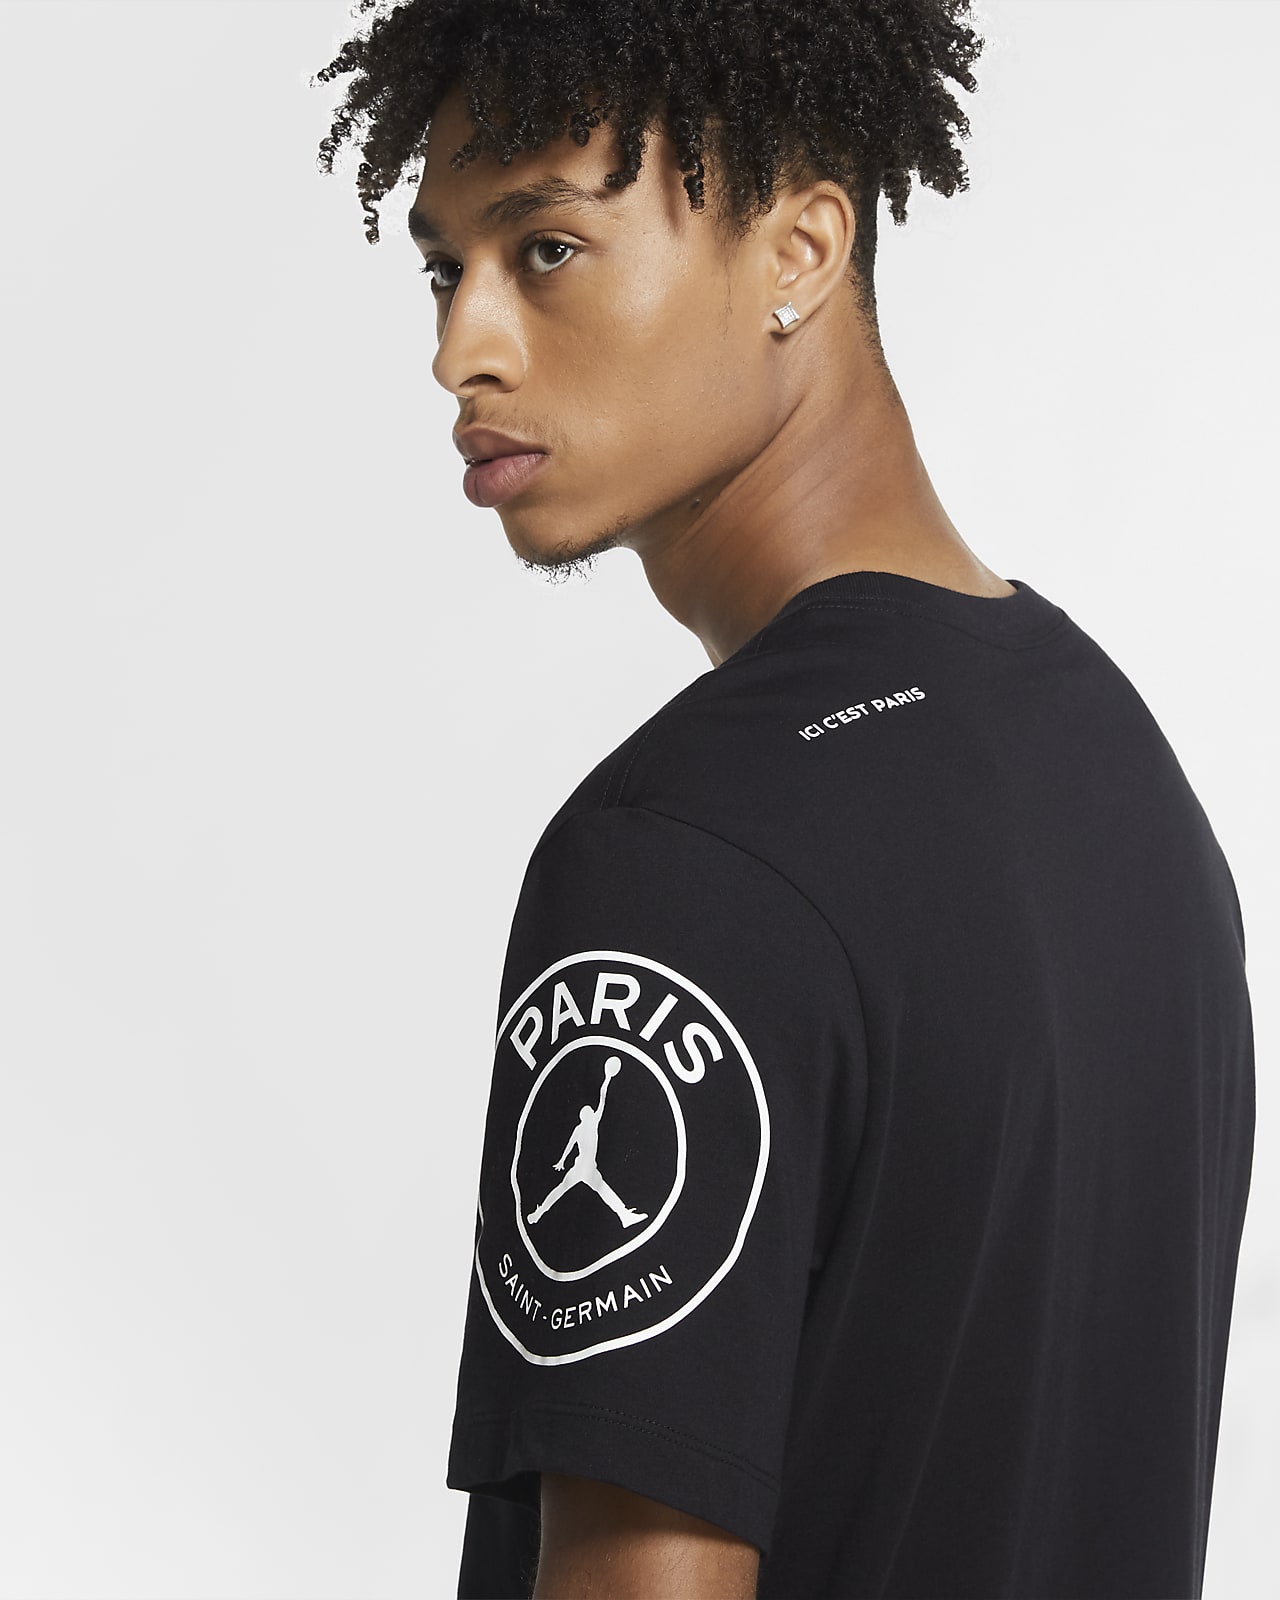 Nike公式 パリ サンジェルマン ロゴ メンズ Tシャツ オンラインストア 通販サイト